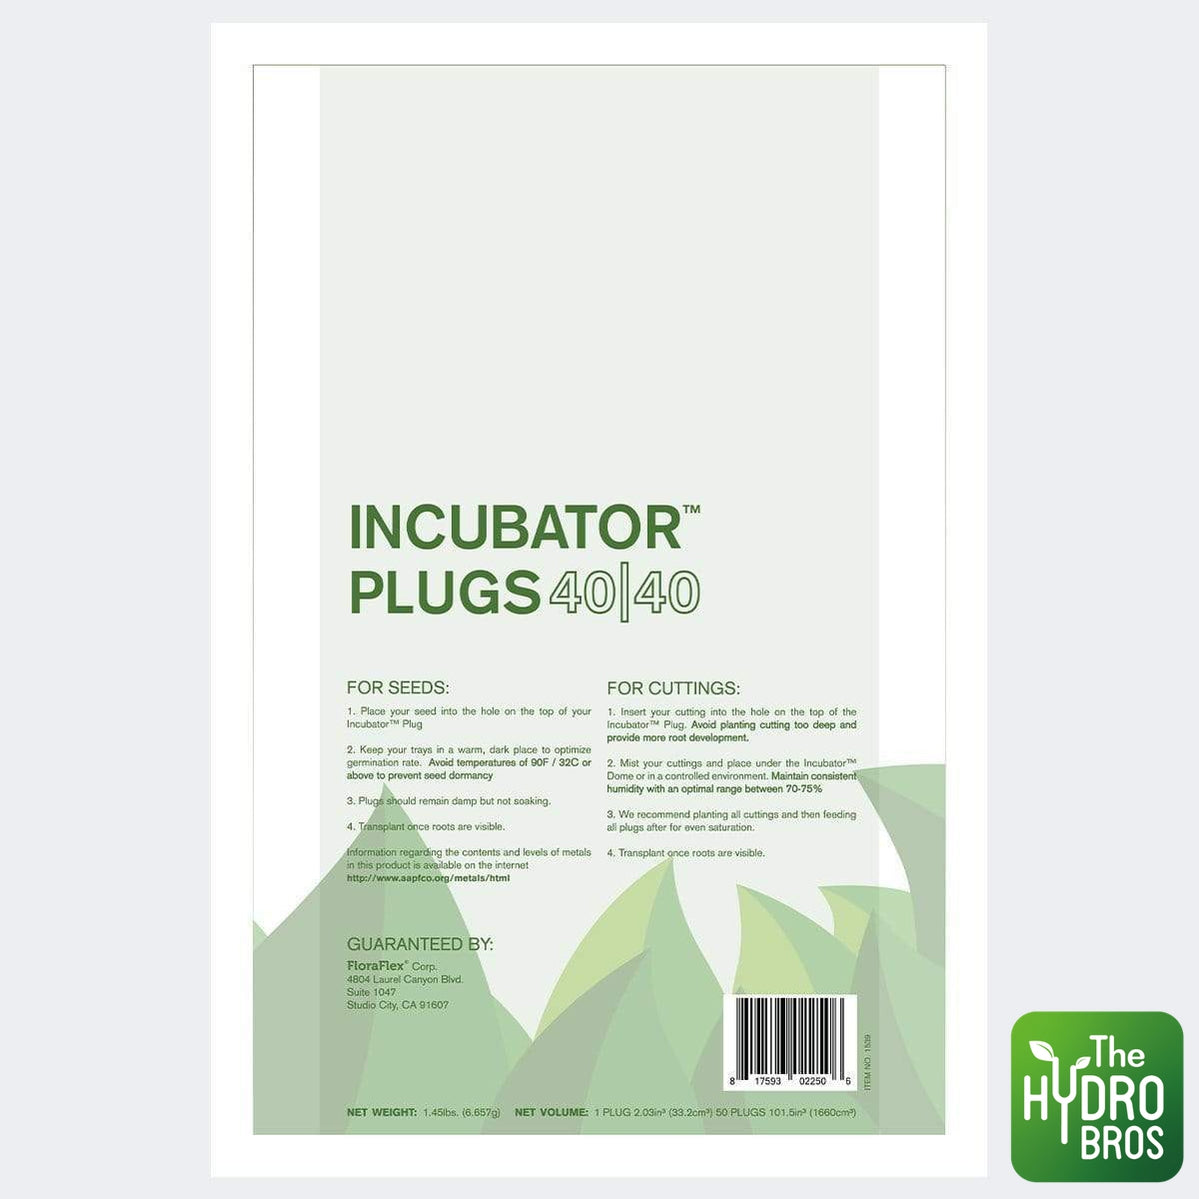 Propagator FloraFlex Incubator - 40|40 Coco Plugs - 50 pack